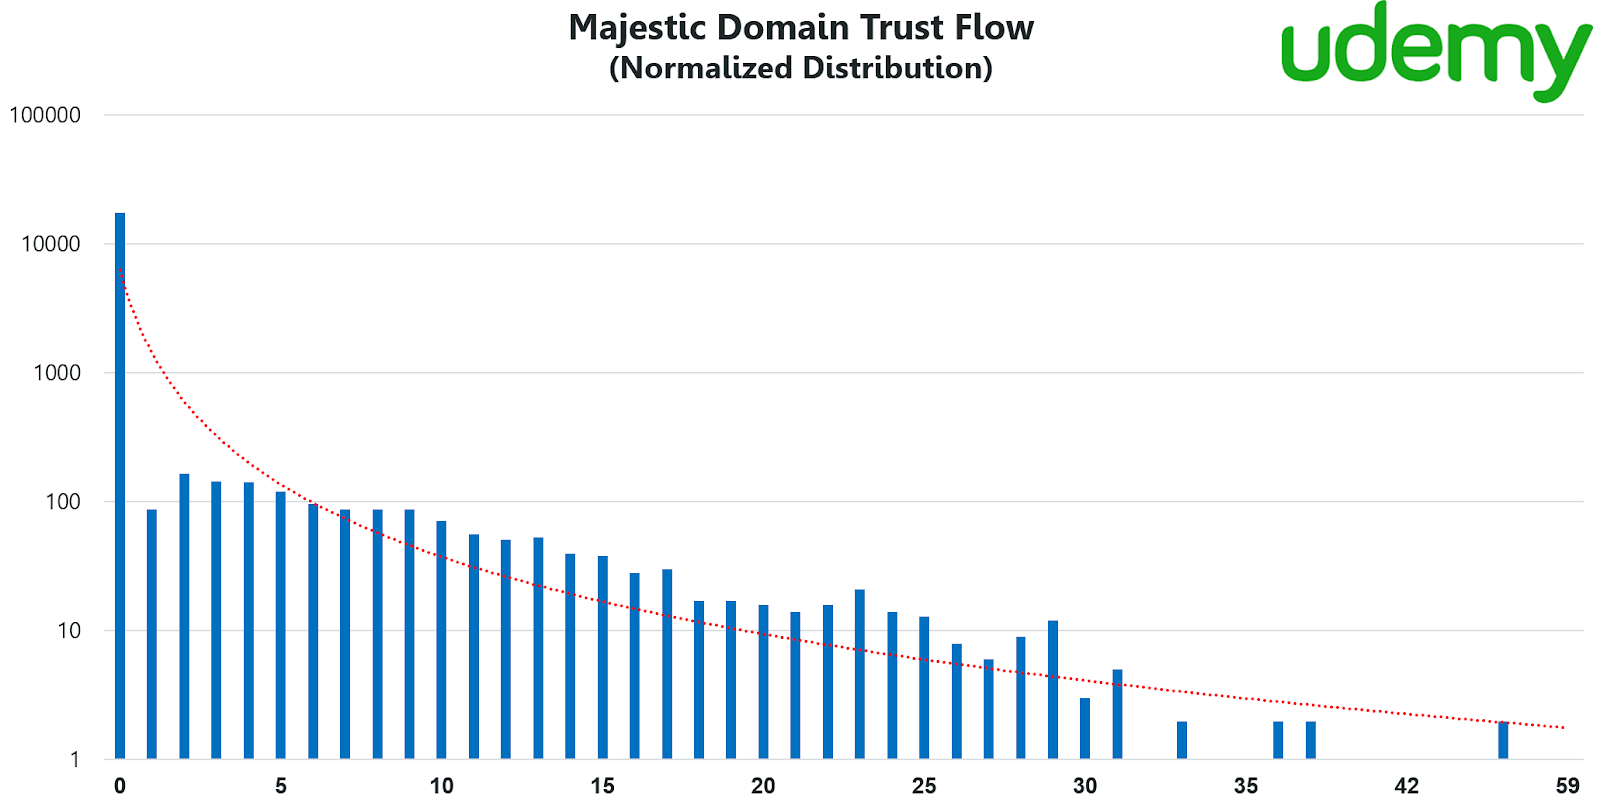 Majestic domain trust flow